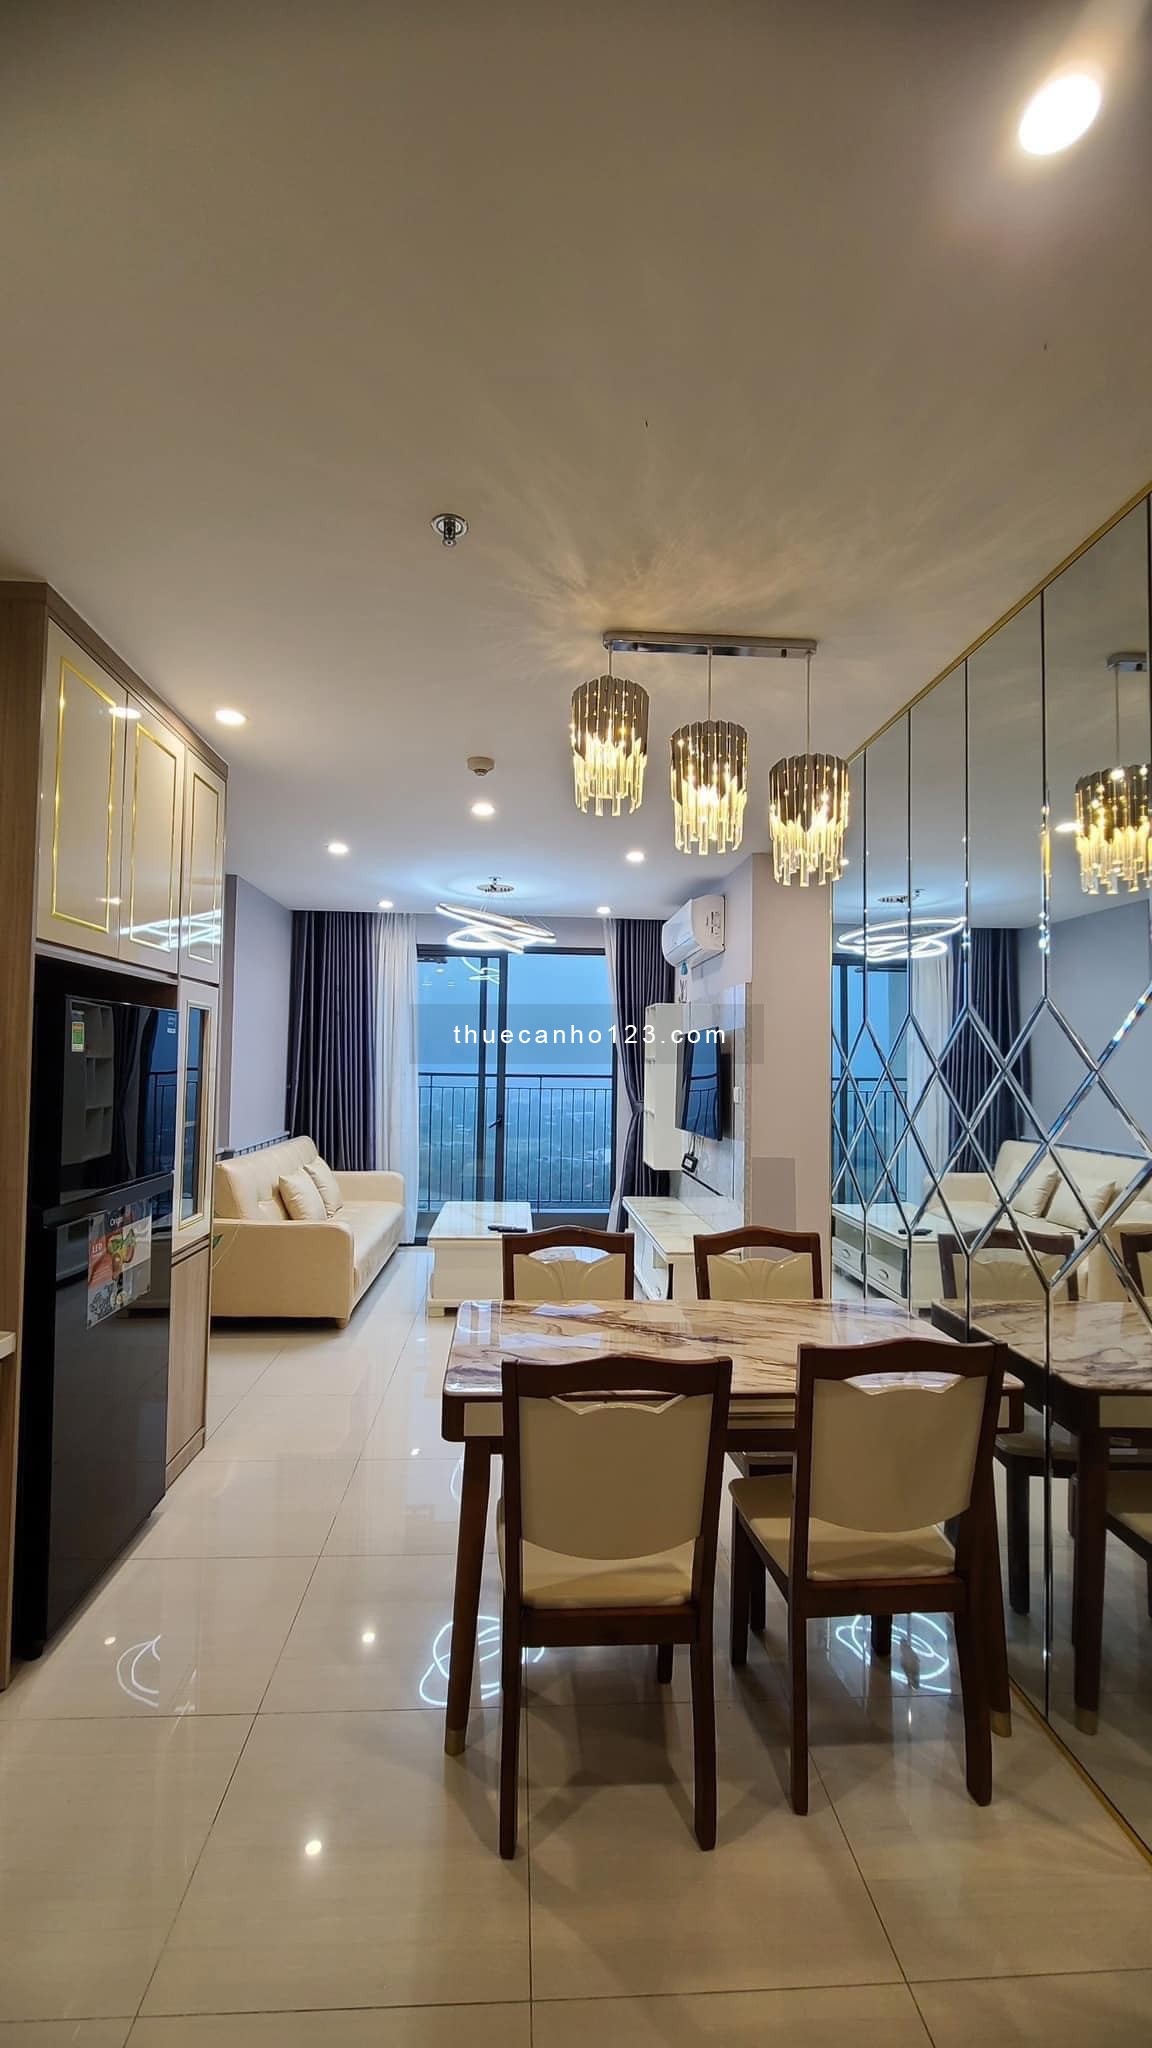 ORIGAMI apartment for rent 5 MILLION VND/ MONTH - VINHOMES GRAND PARK